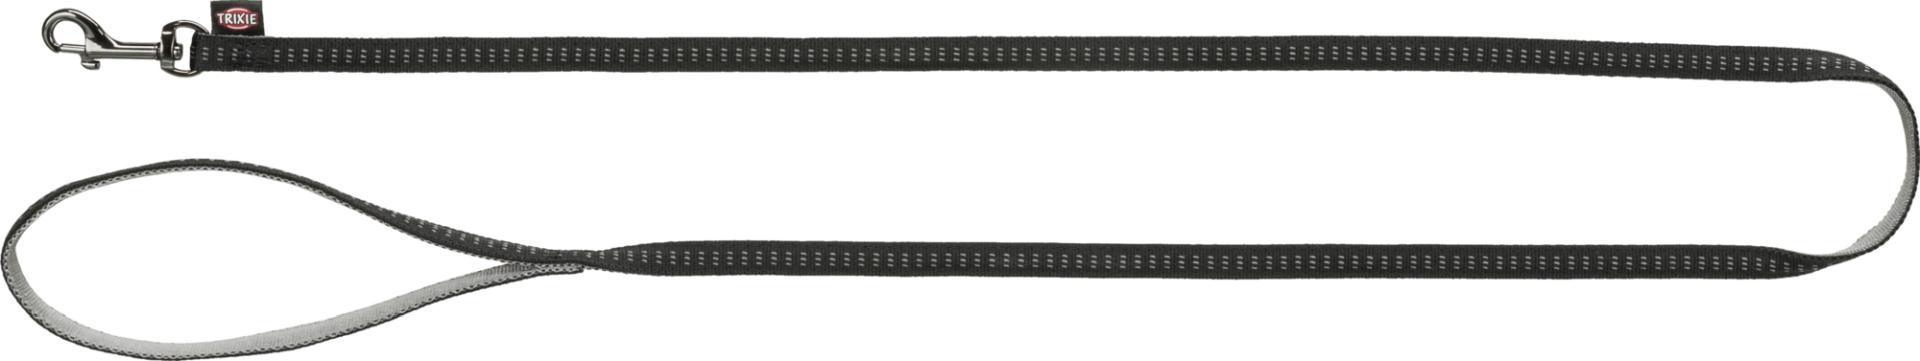 TRIXIE Softline Elegance Leine, XS: 1,20 m / 10 mm, schwarz / grafit